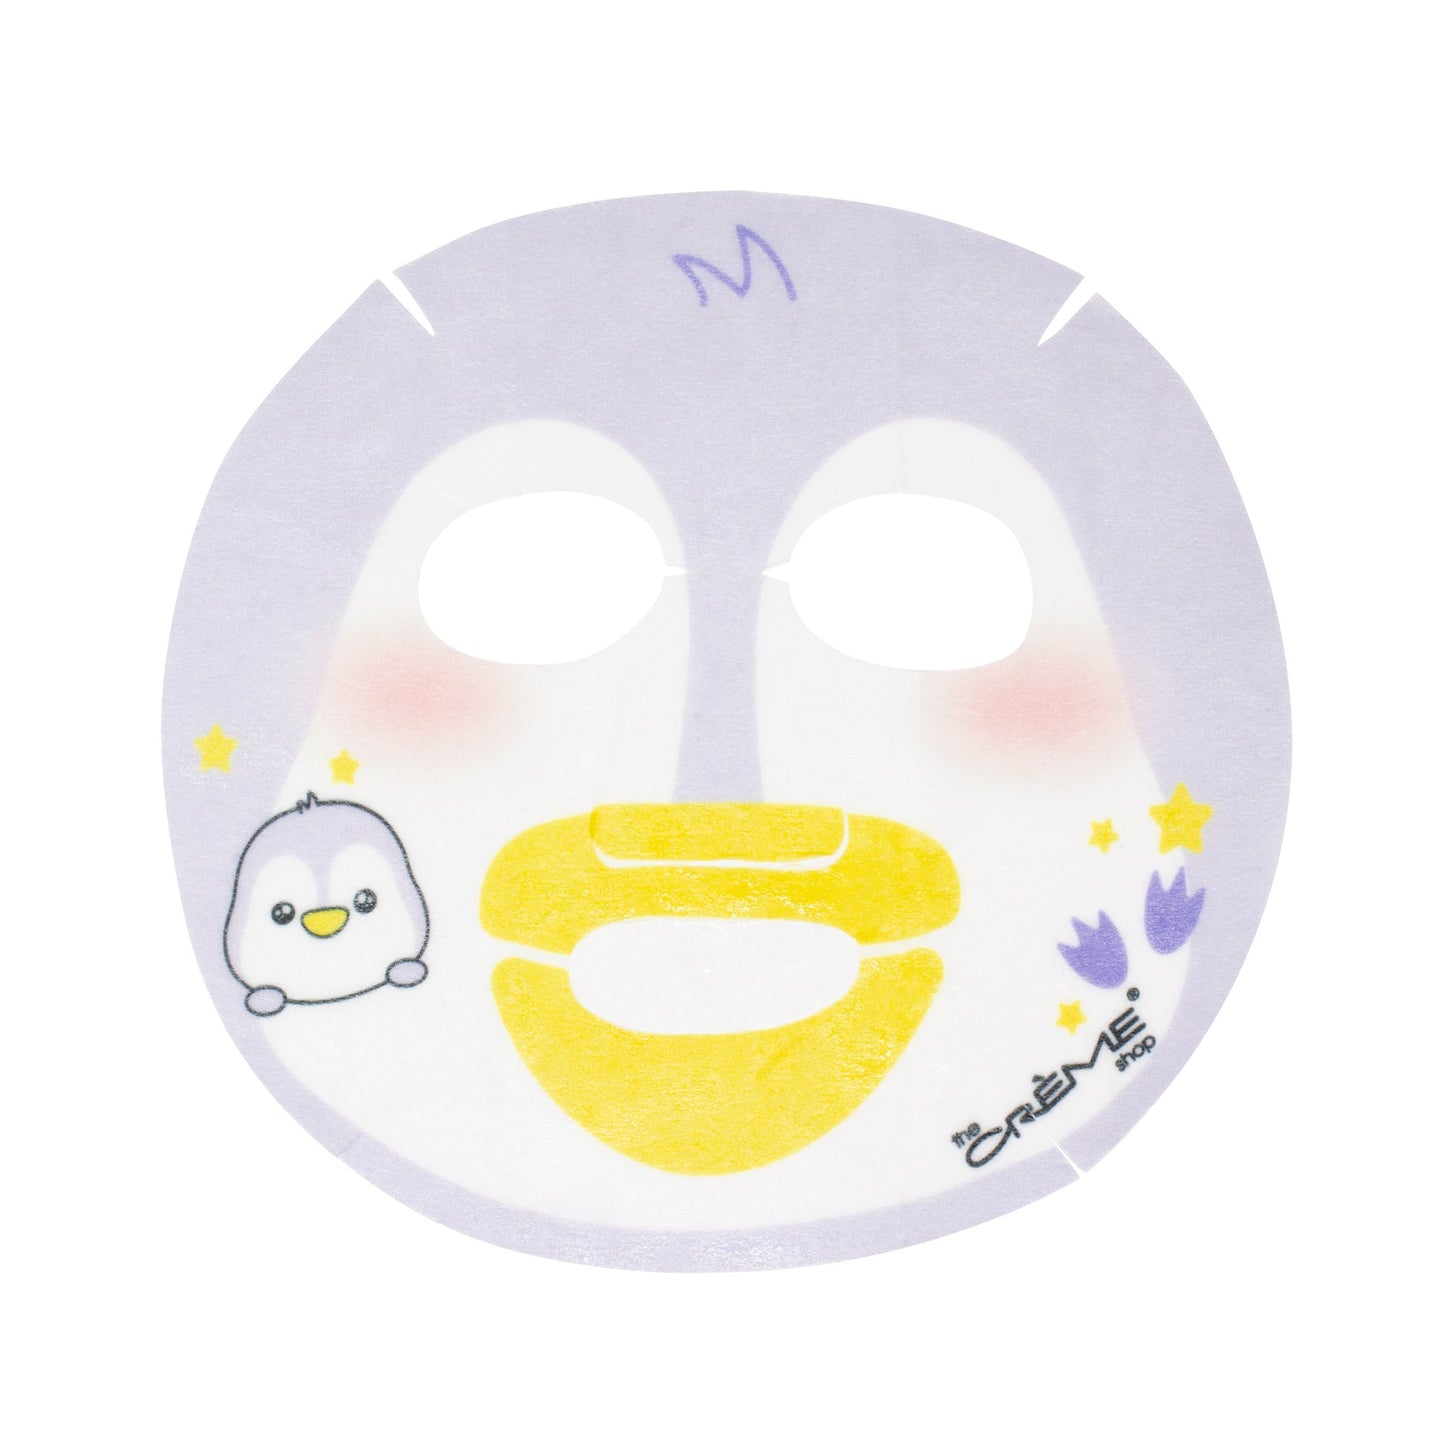 Drink Up, Skin! Animated Penguin Face Mask - Infused with Moisturizing Hyaluronic Acid Animated Sheet Masks - The Crème Shop 